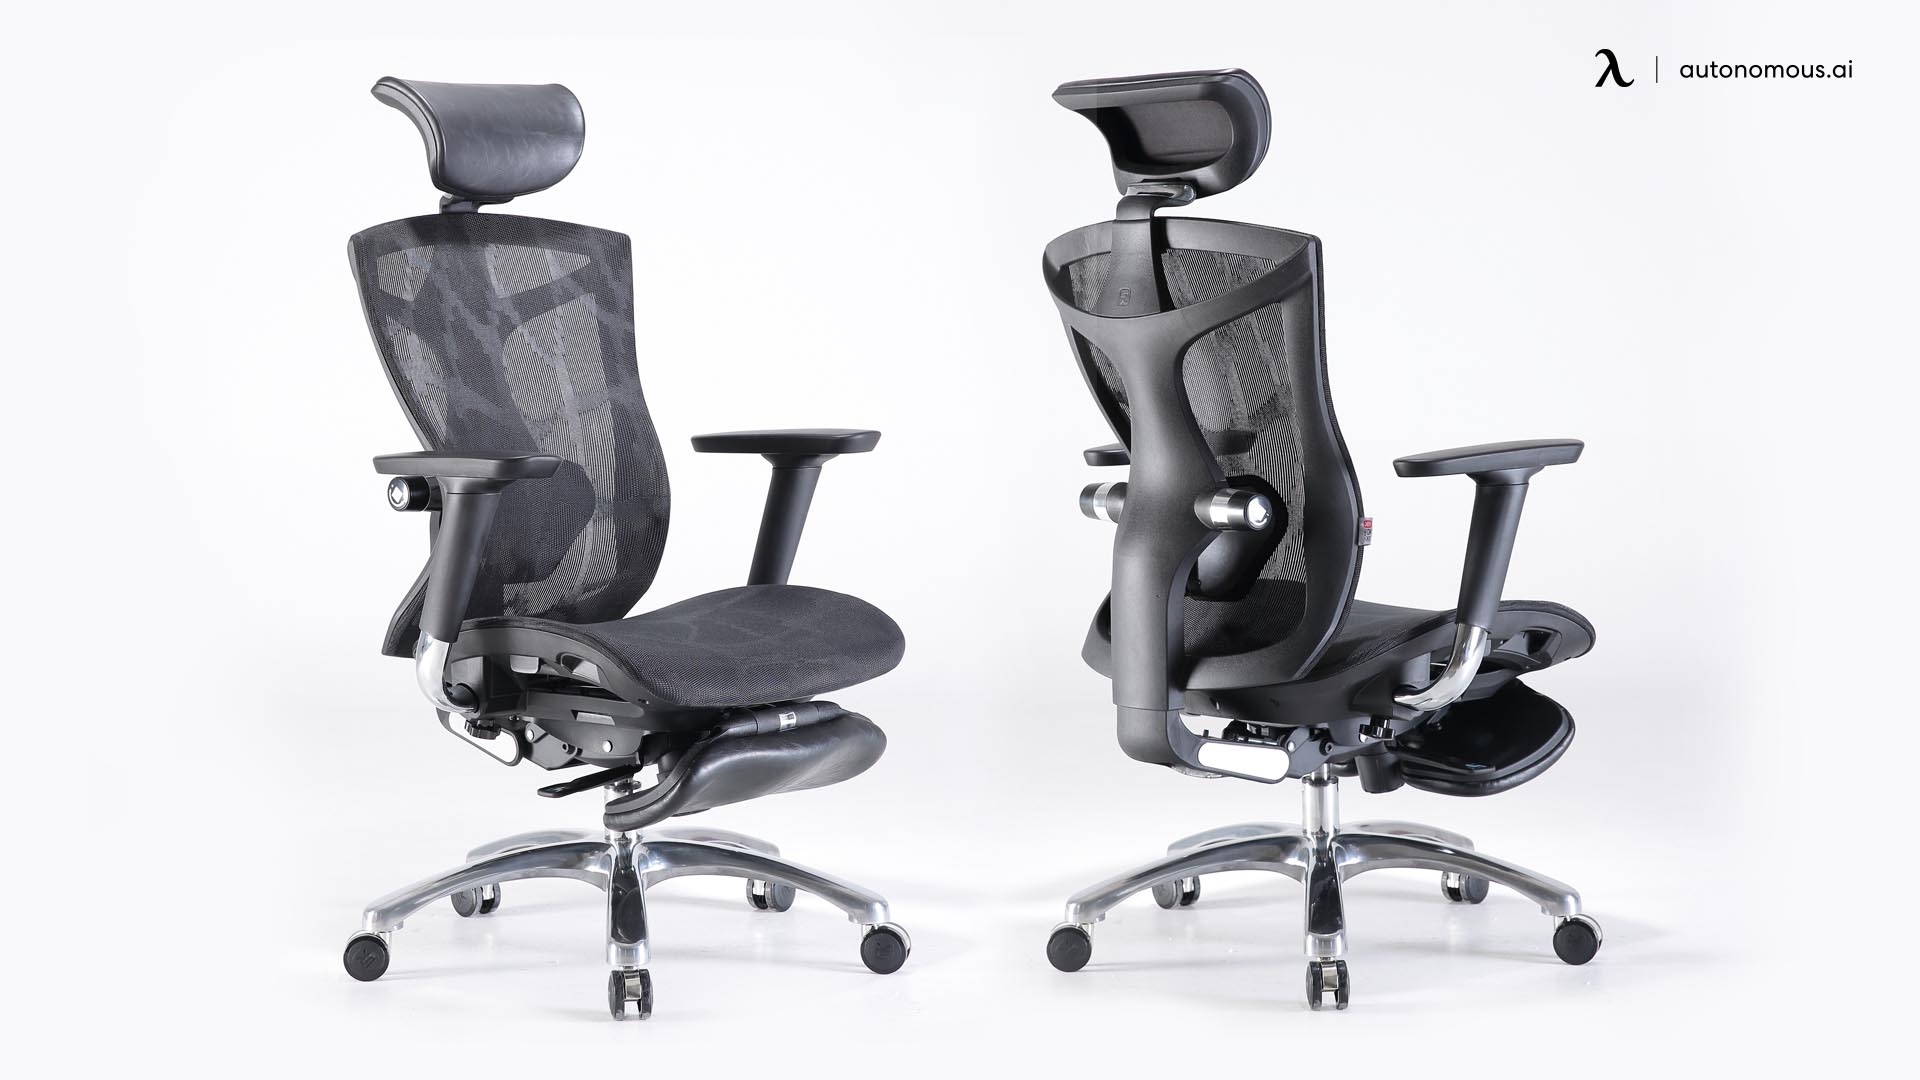 SIHOO Doro-C300 Ergonomic Office Chair